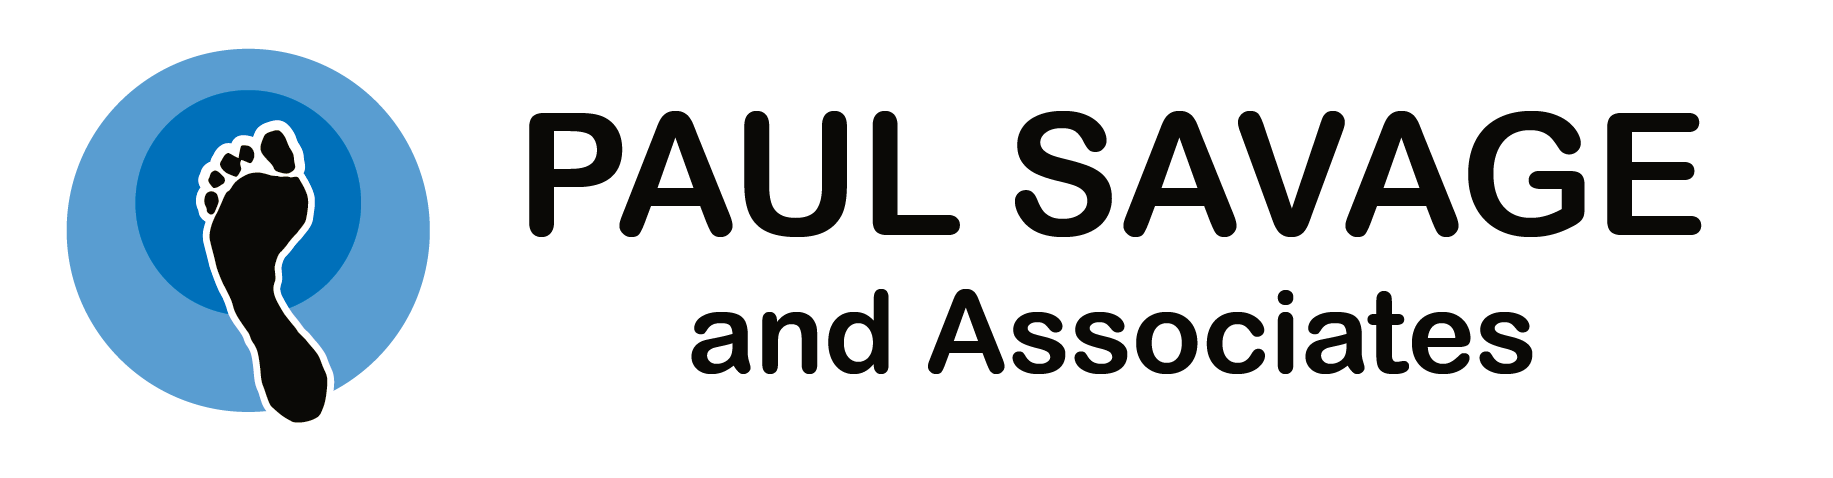 Paul Savage and Associates